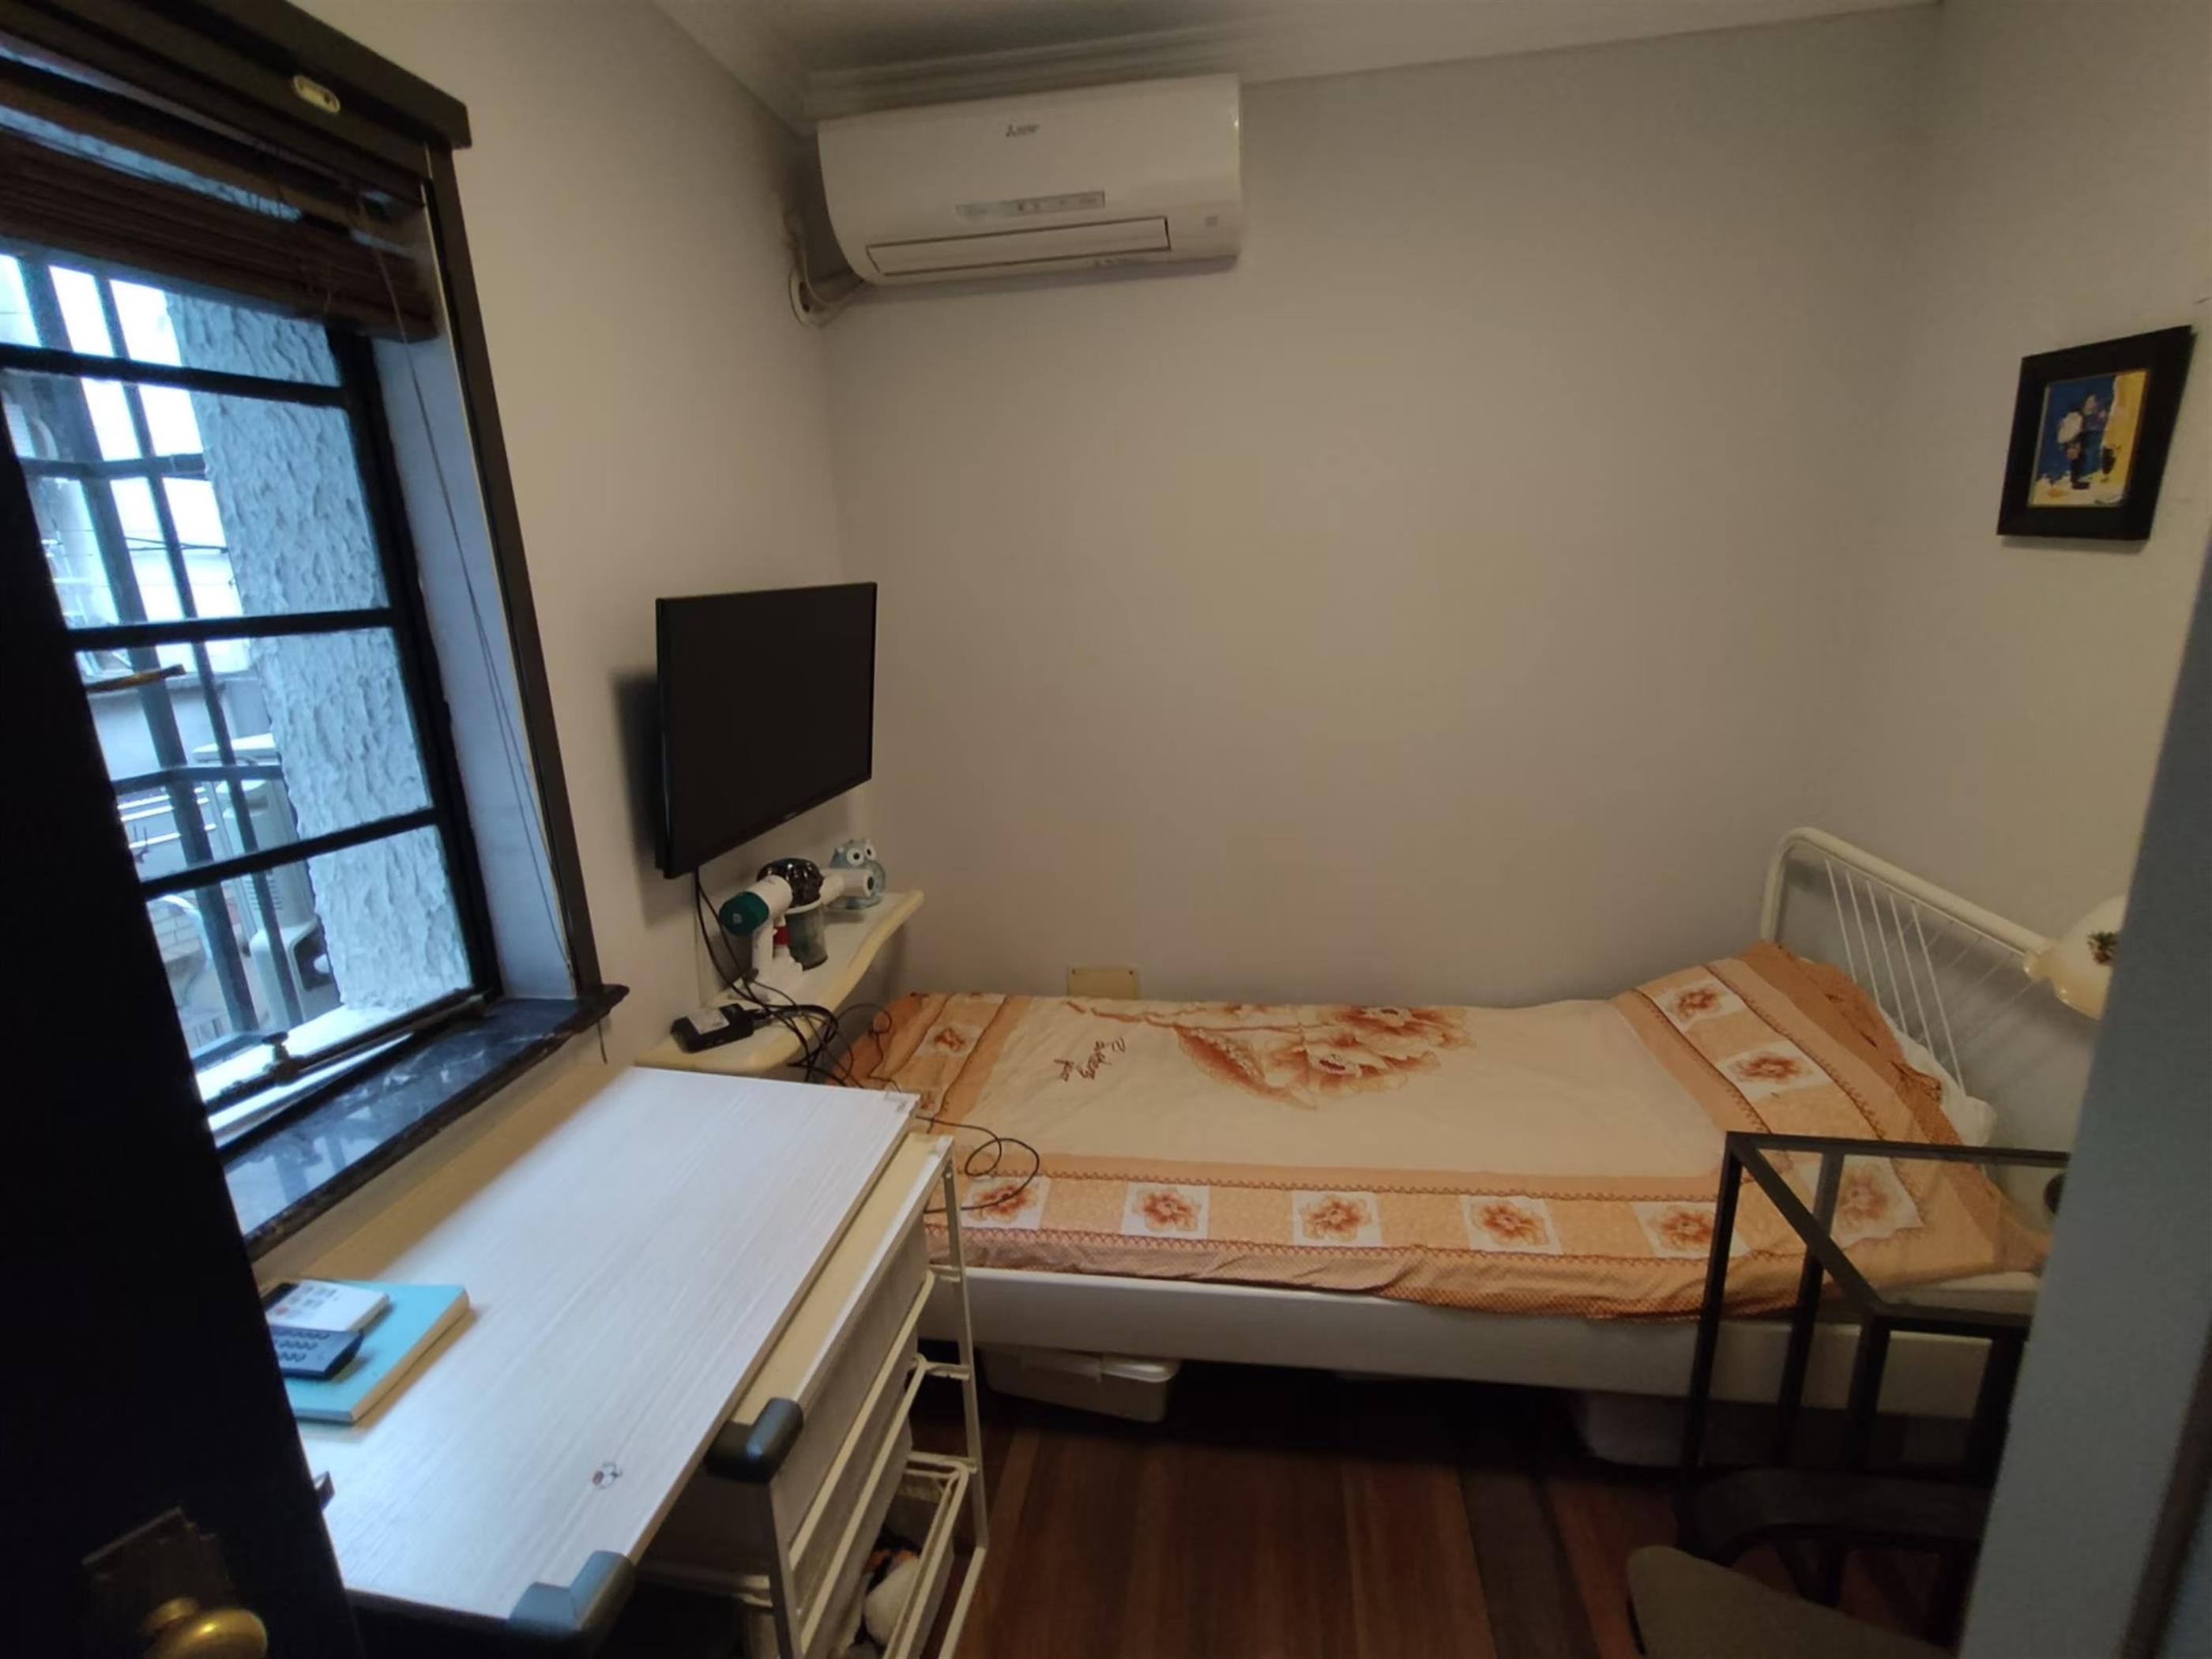 small bedroom *** For Sale *** 3-Floor 5-Room Nanjing W Rd Lane House in Shanghai